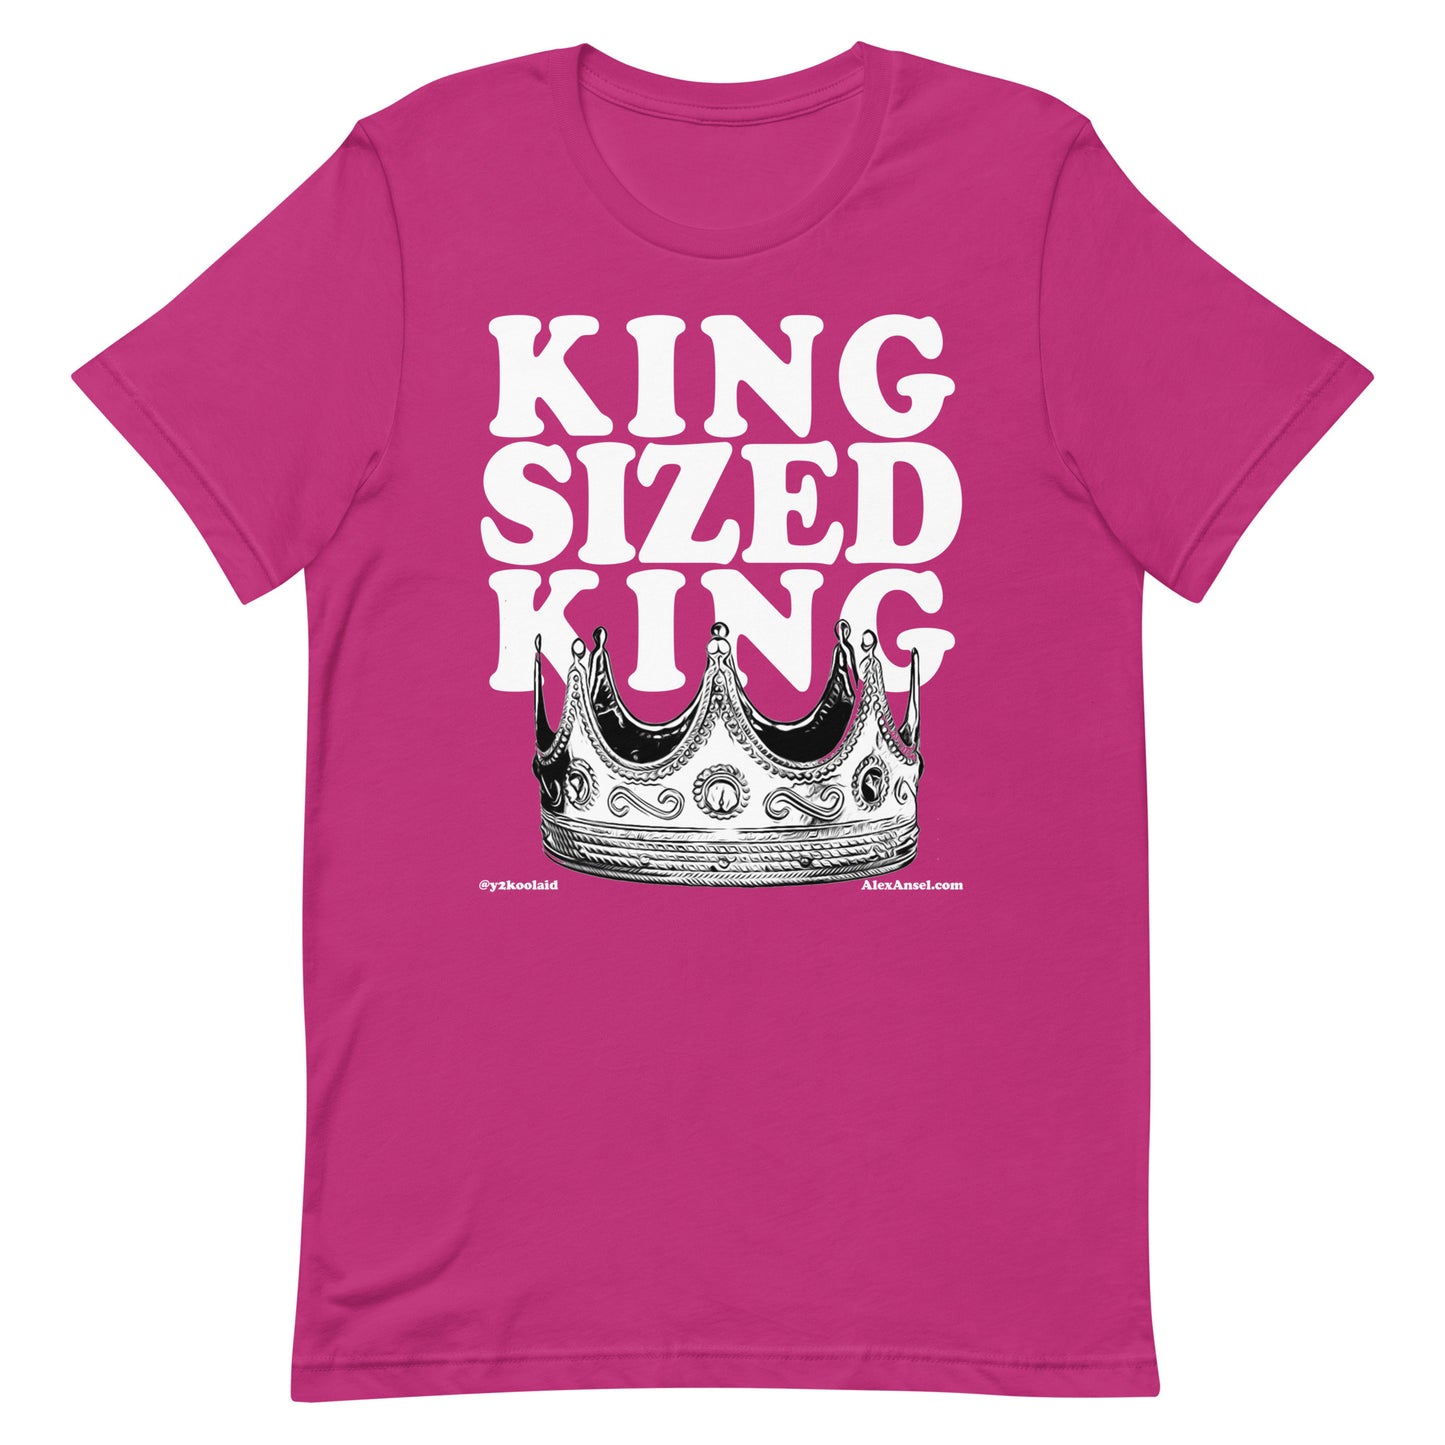 KING SIZED KING (w)